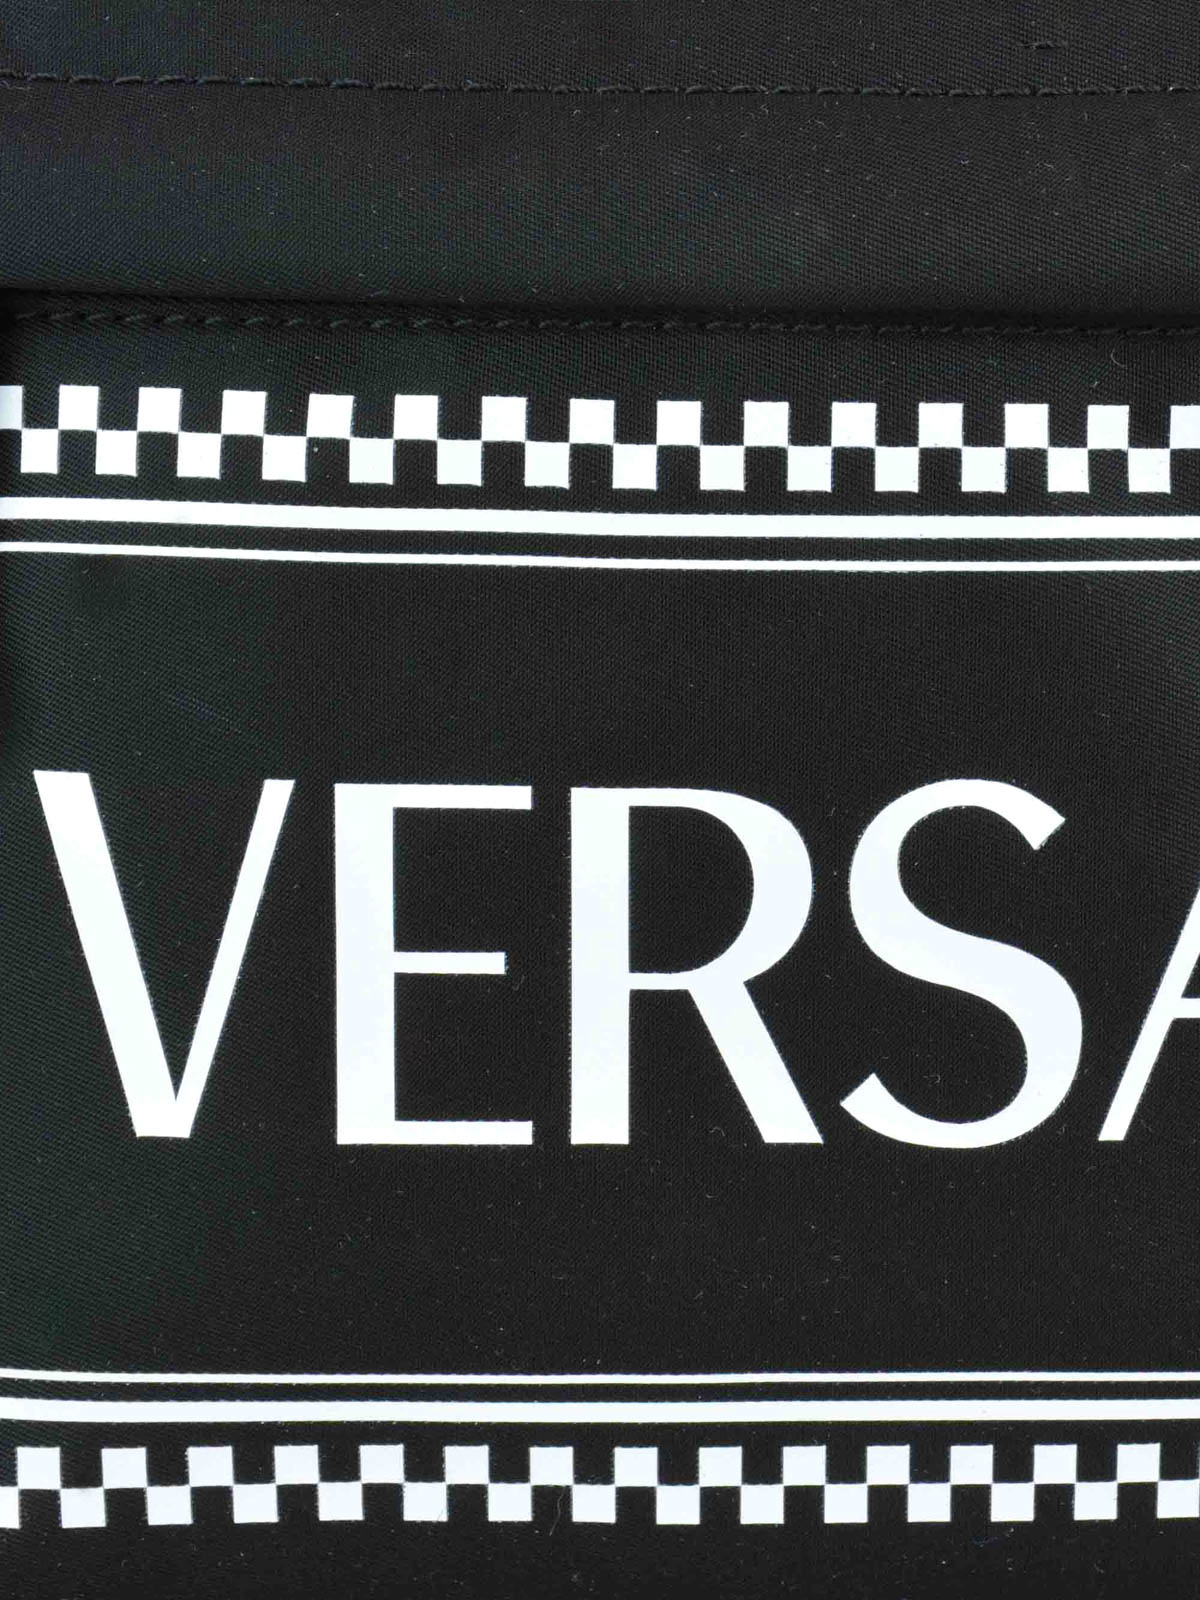 Backpacks Versace - 90s Vintage logo black backpack - DBFG781DNYVERDNW